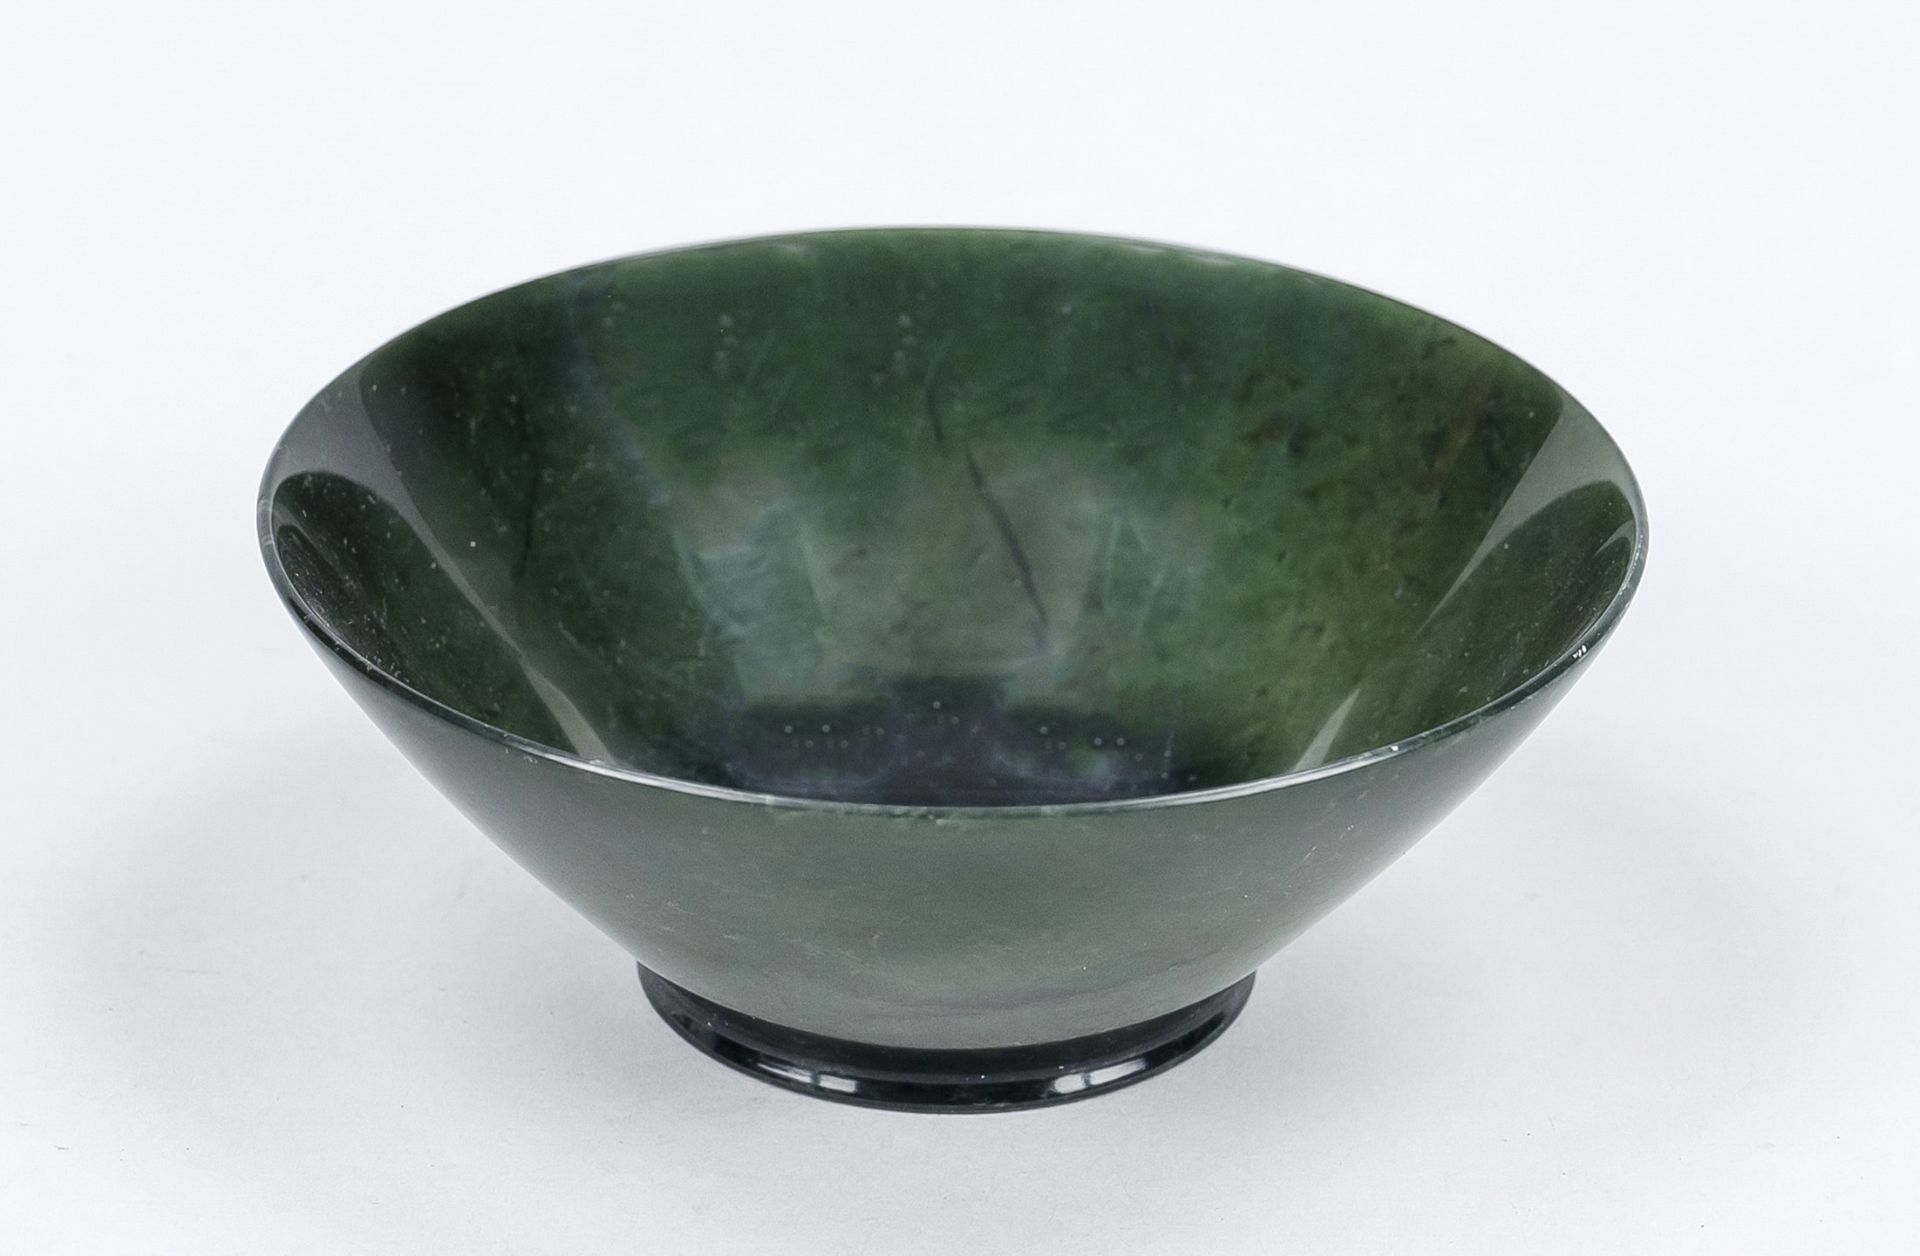 Stone bowl (no jade), China, probably 20th century, spinach green, semi-transparent stone?, slightly